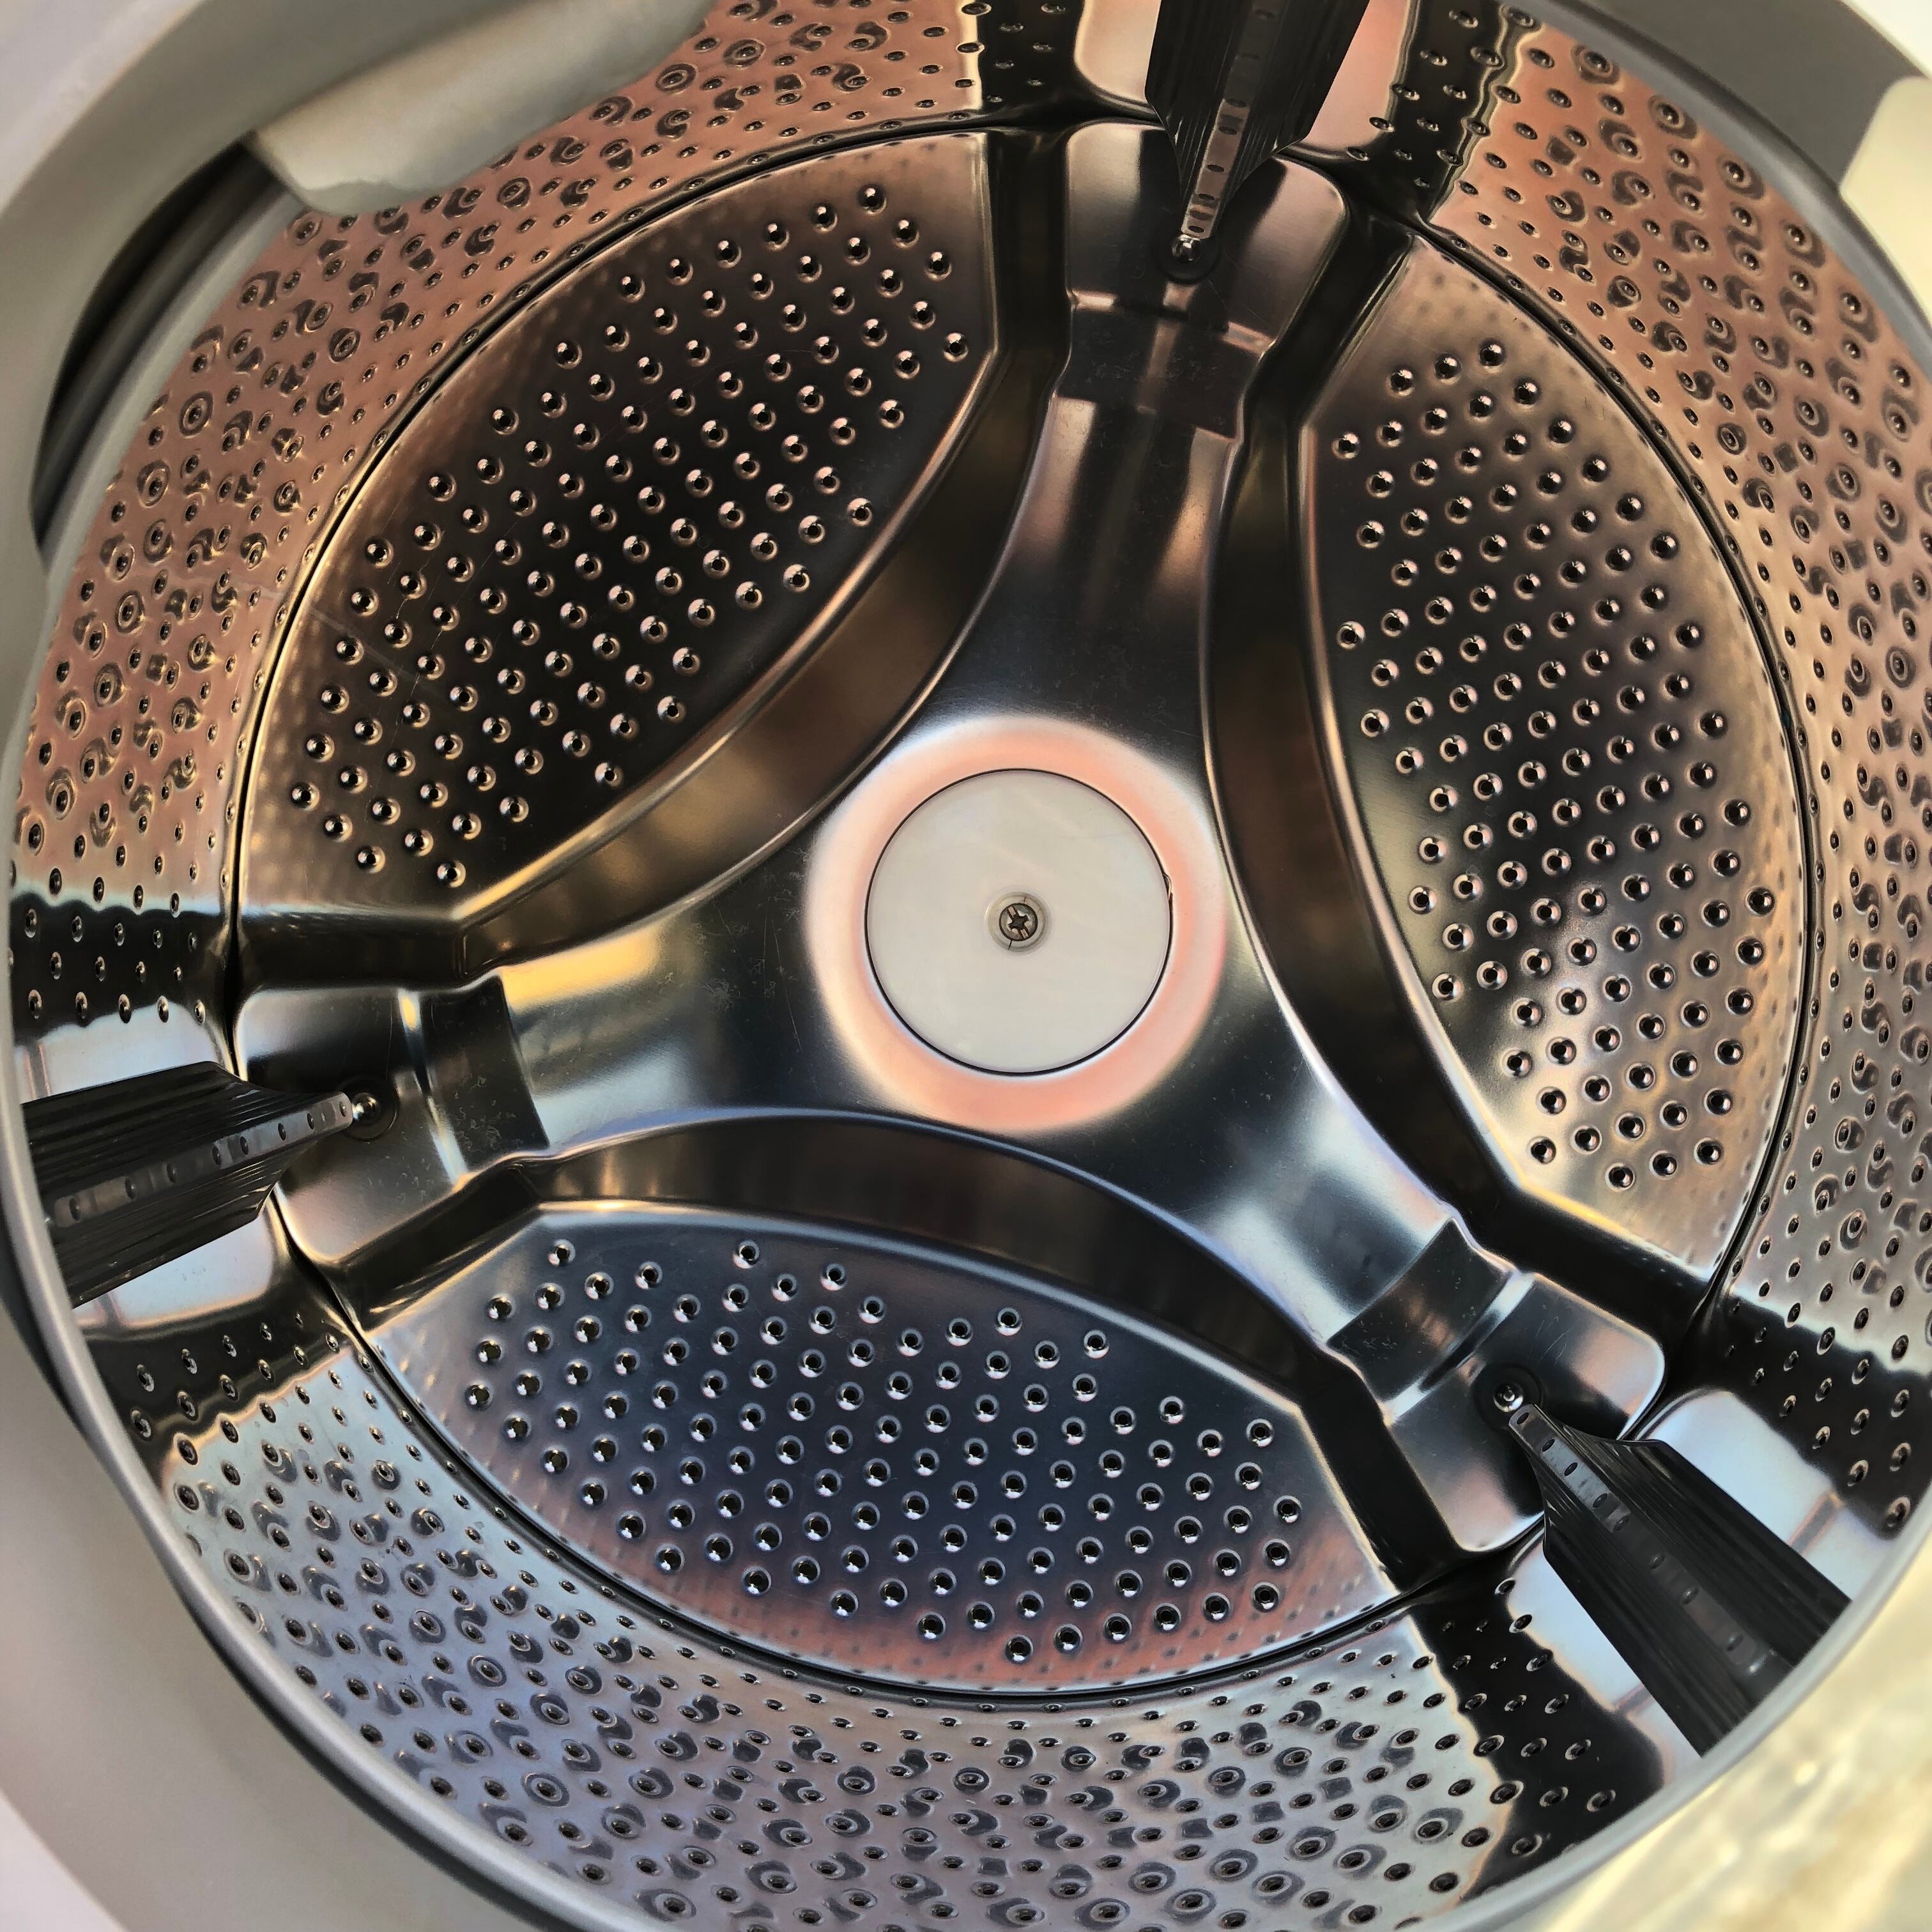 TOSHIBA 9.0kg 乾燥機付ドラム式洗濯機 TW-250VG | ECOPRODUCE